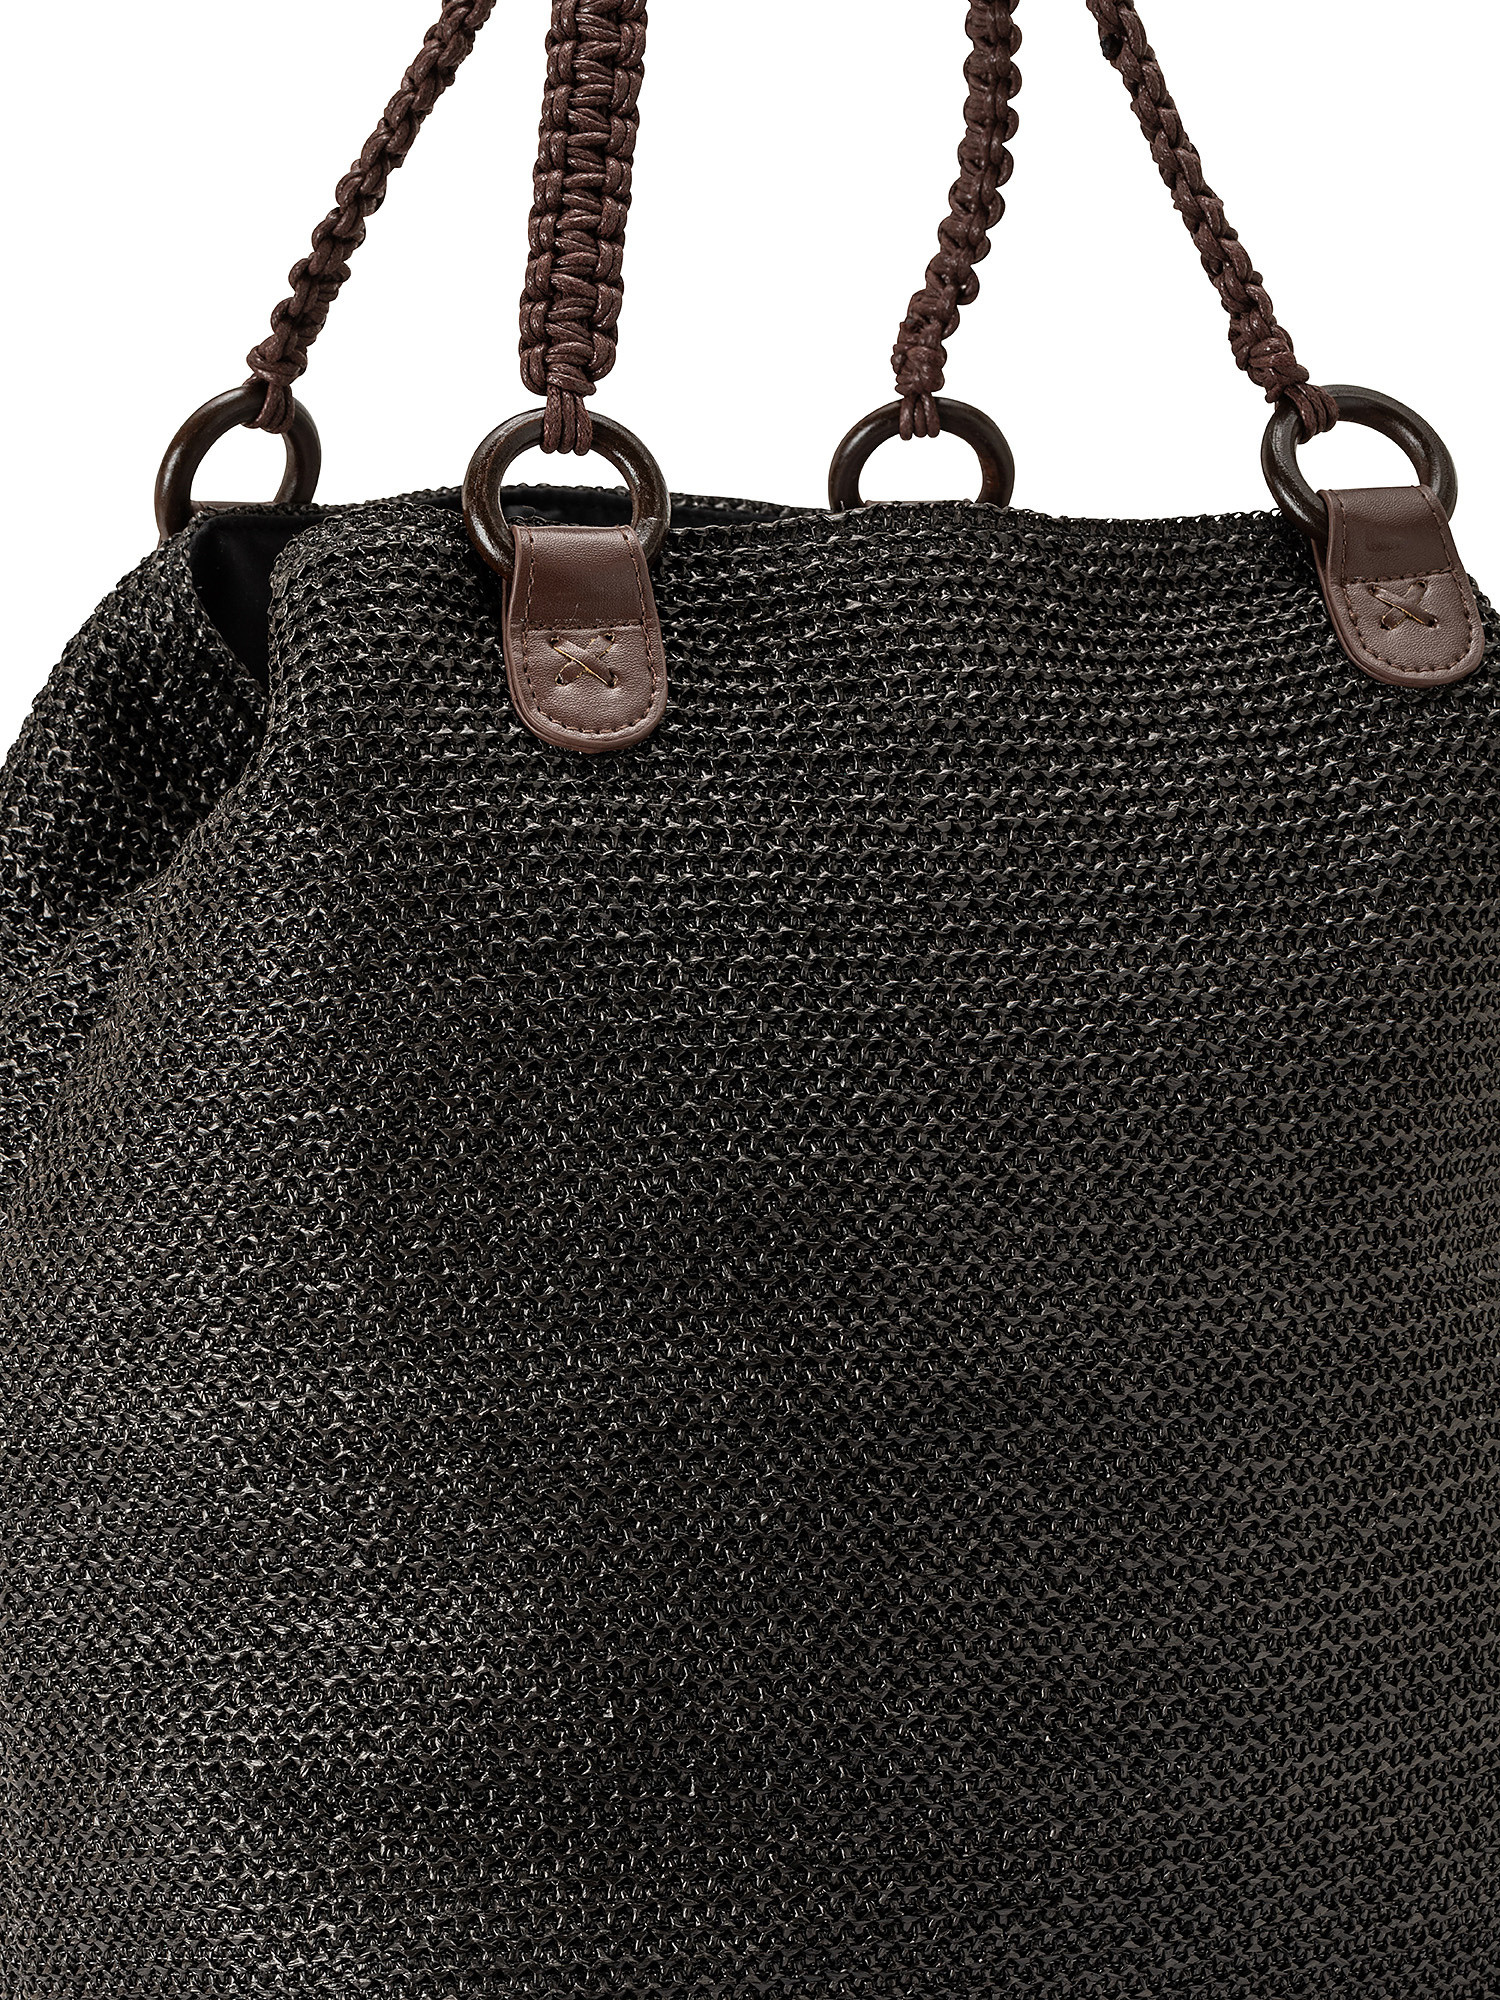 Straw-effect shopping bag, Black, large image number 2